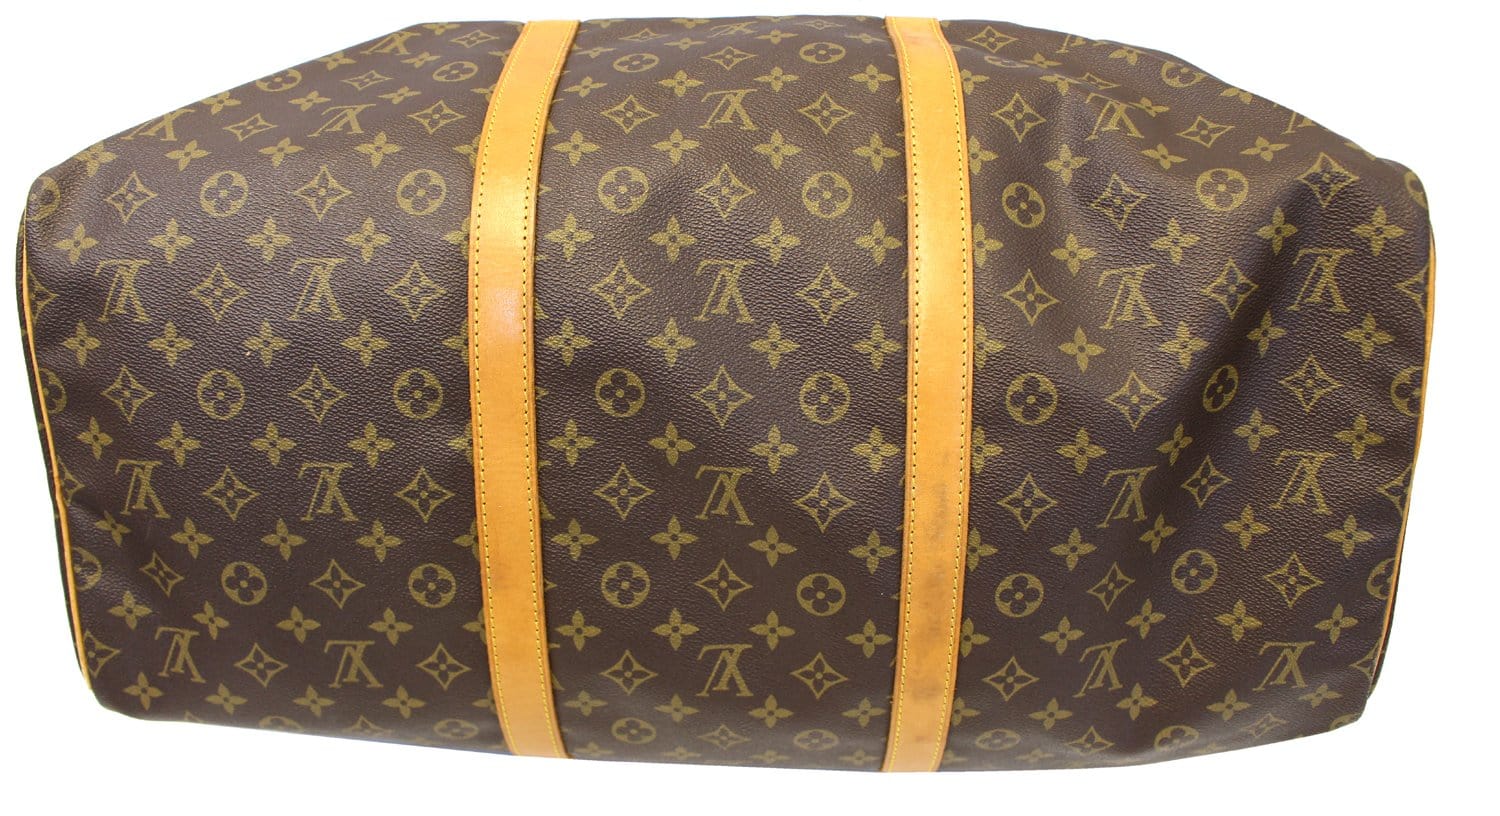 LOUIS VUITTON Sac Souple 55 Travel Hand Bag Monogram Leather BN M41622  88SF431